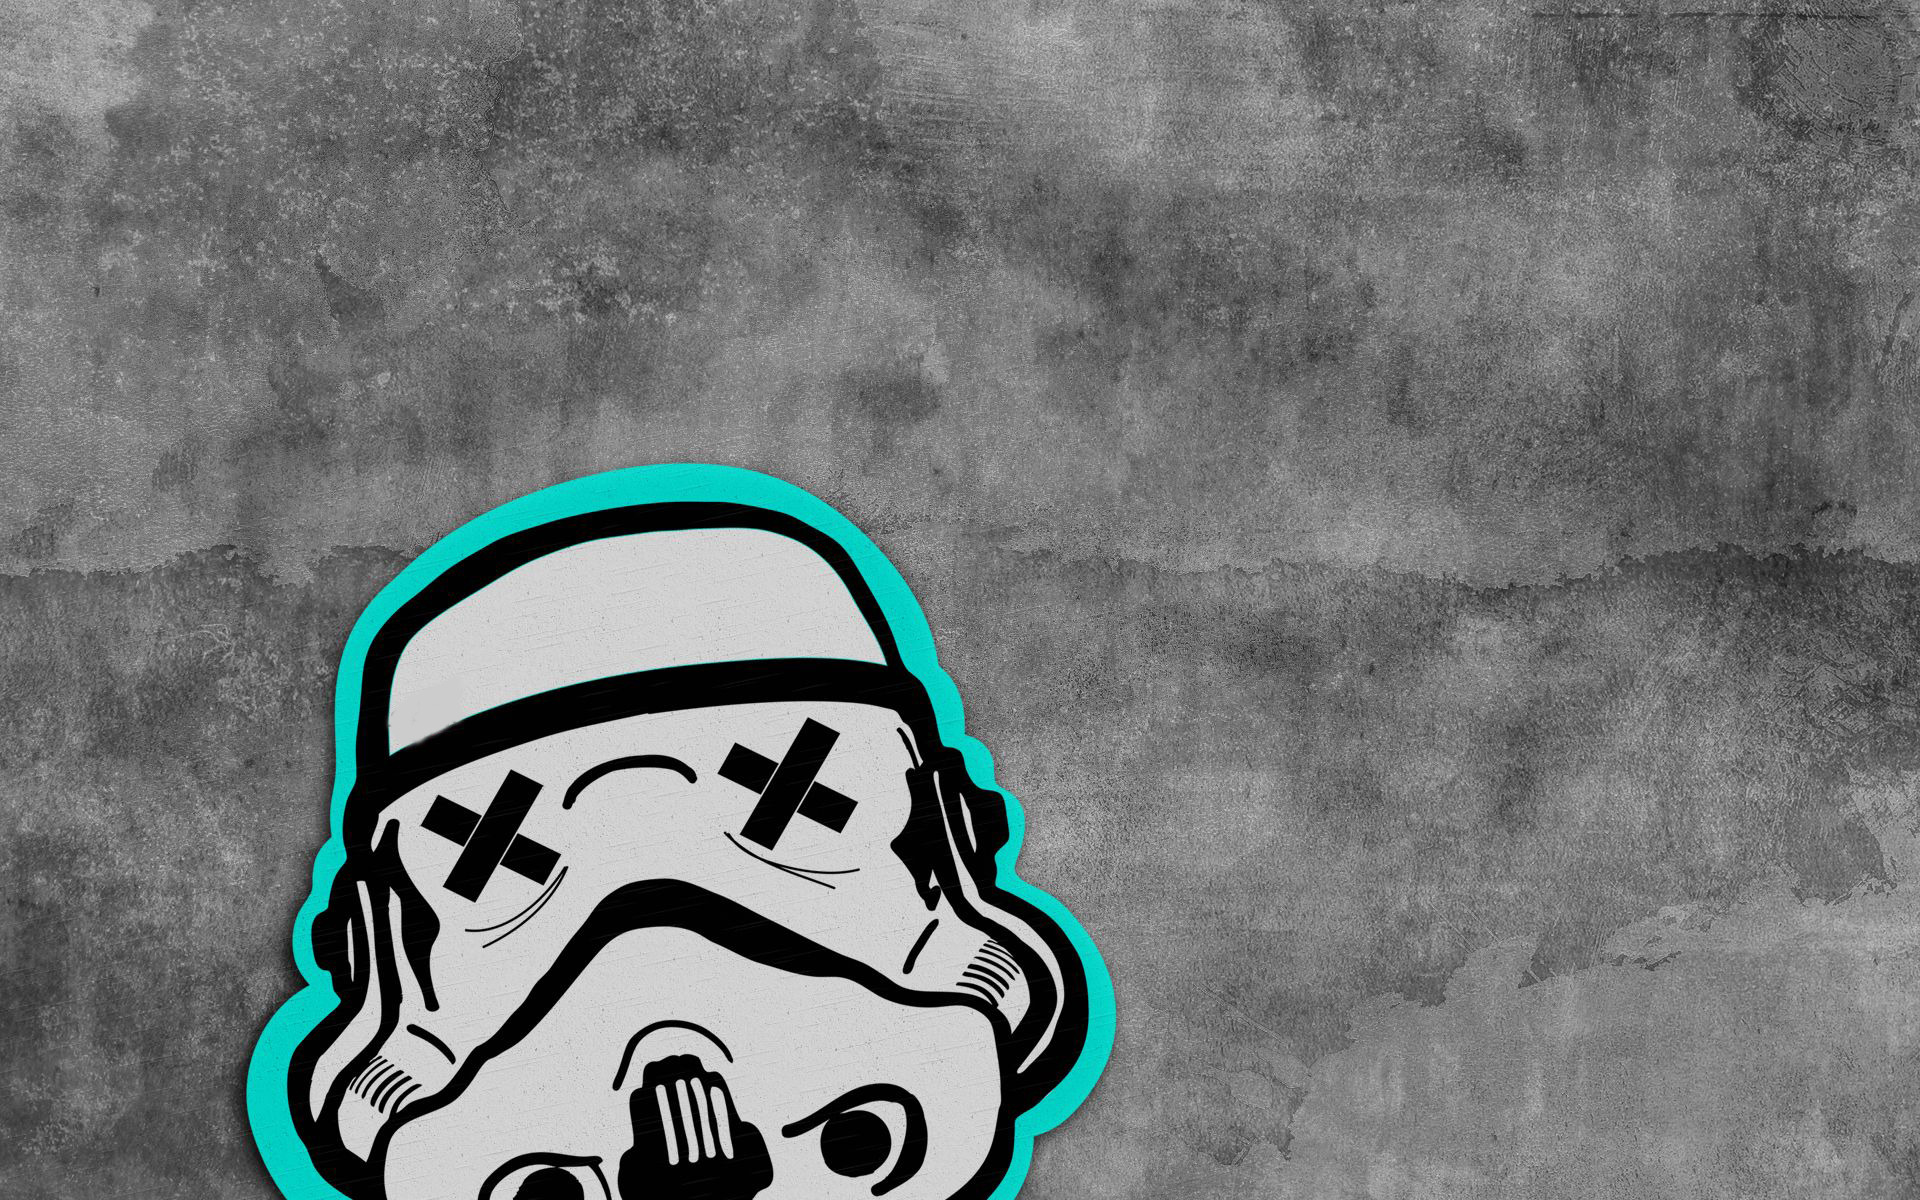 Stormtrooper   Star Wars wallpaper by wallconvertcom